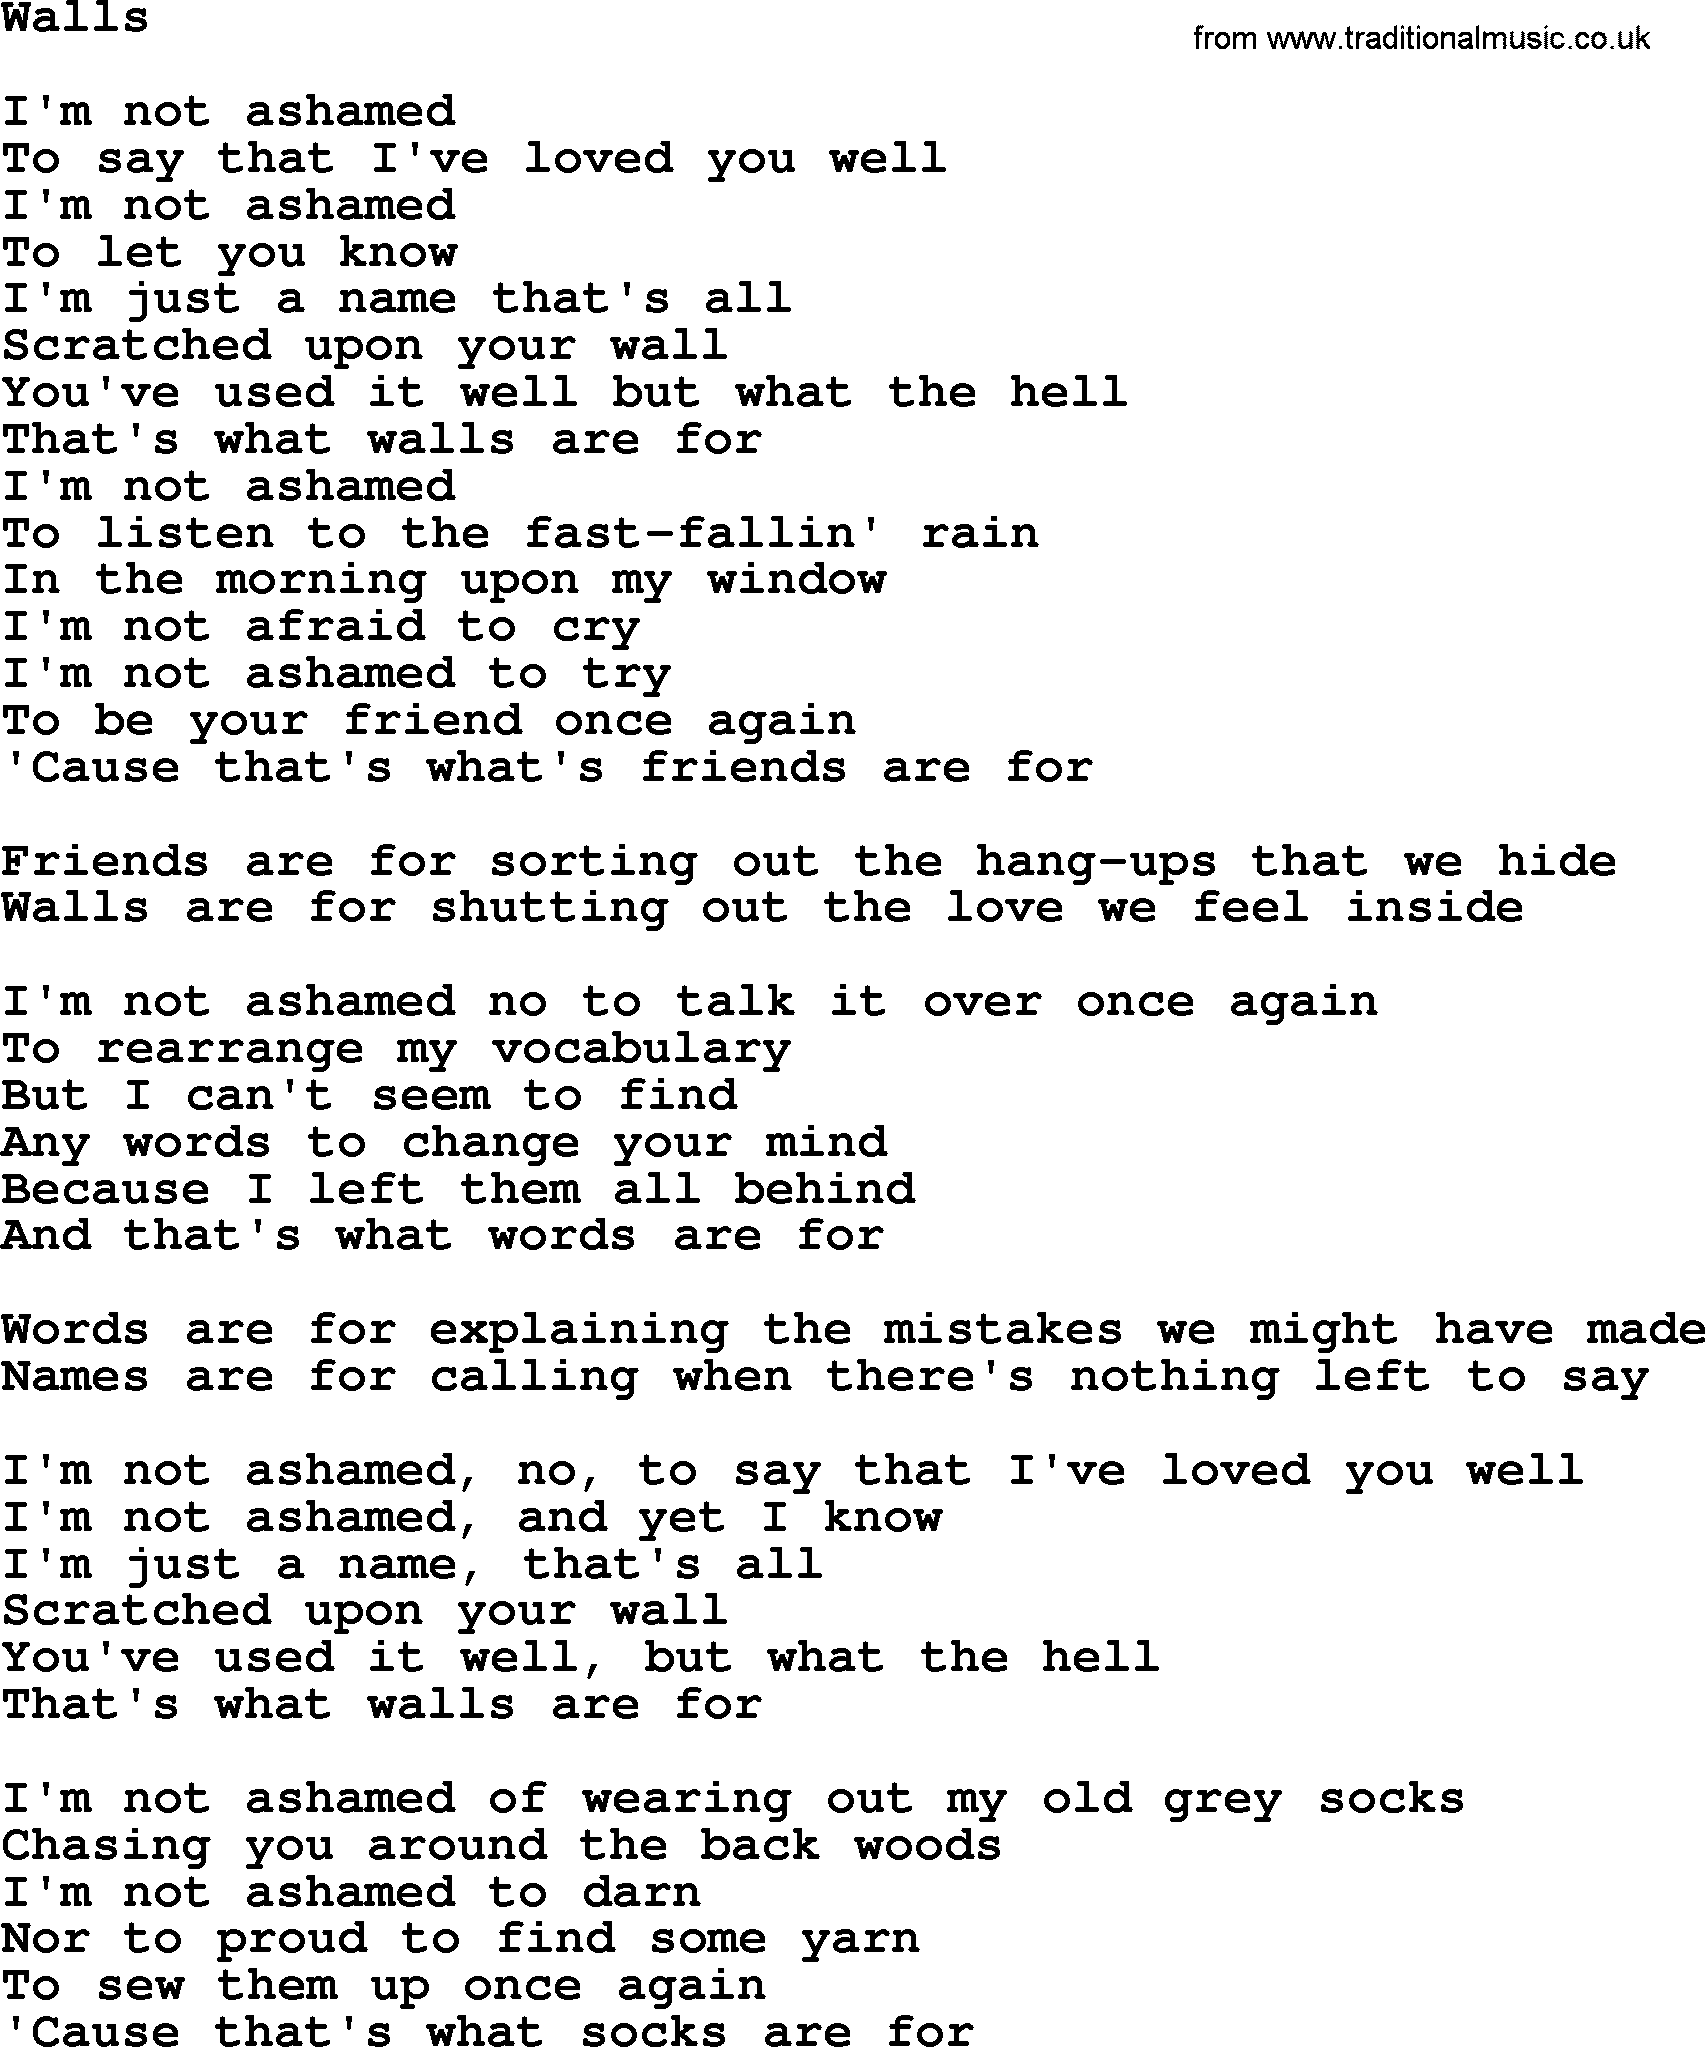 Gordon Lightfoot song Walls, lyrics